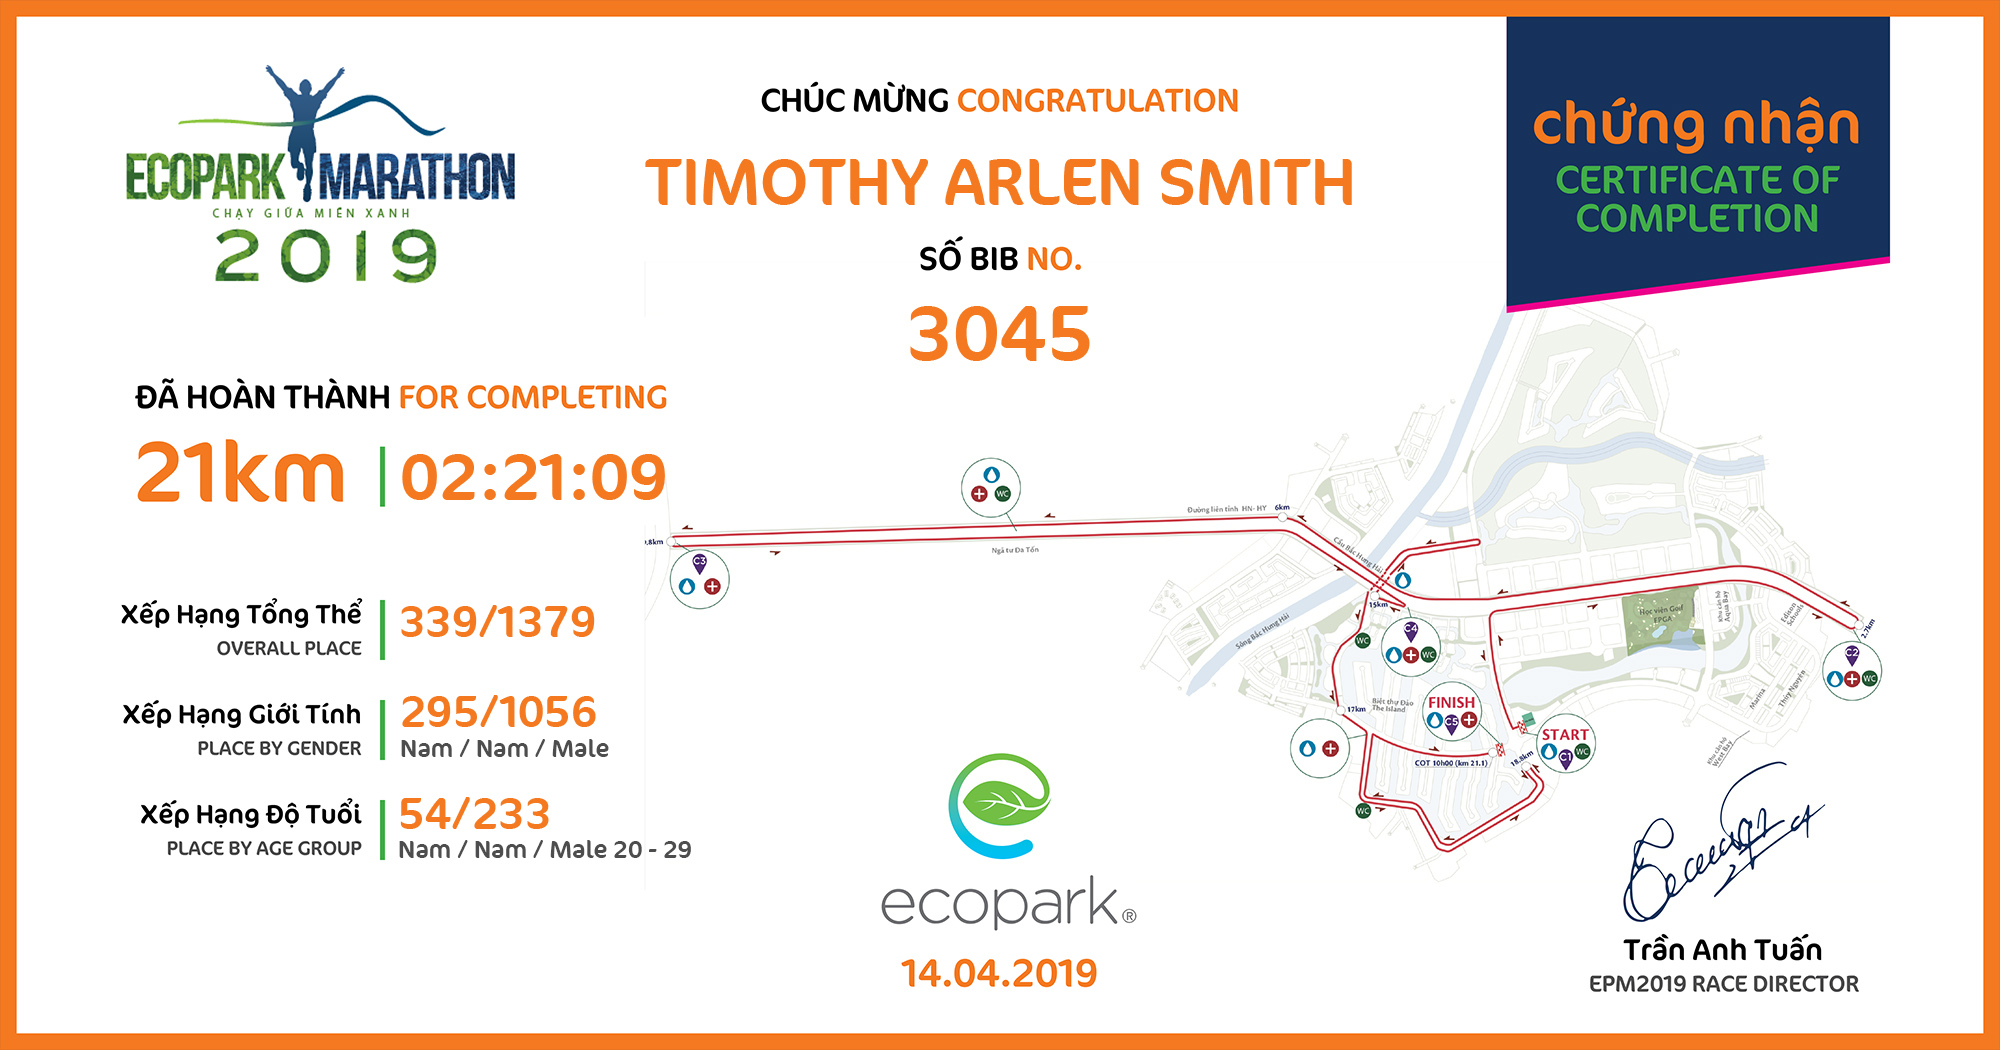 3045 - Timothy Arlen Smith